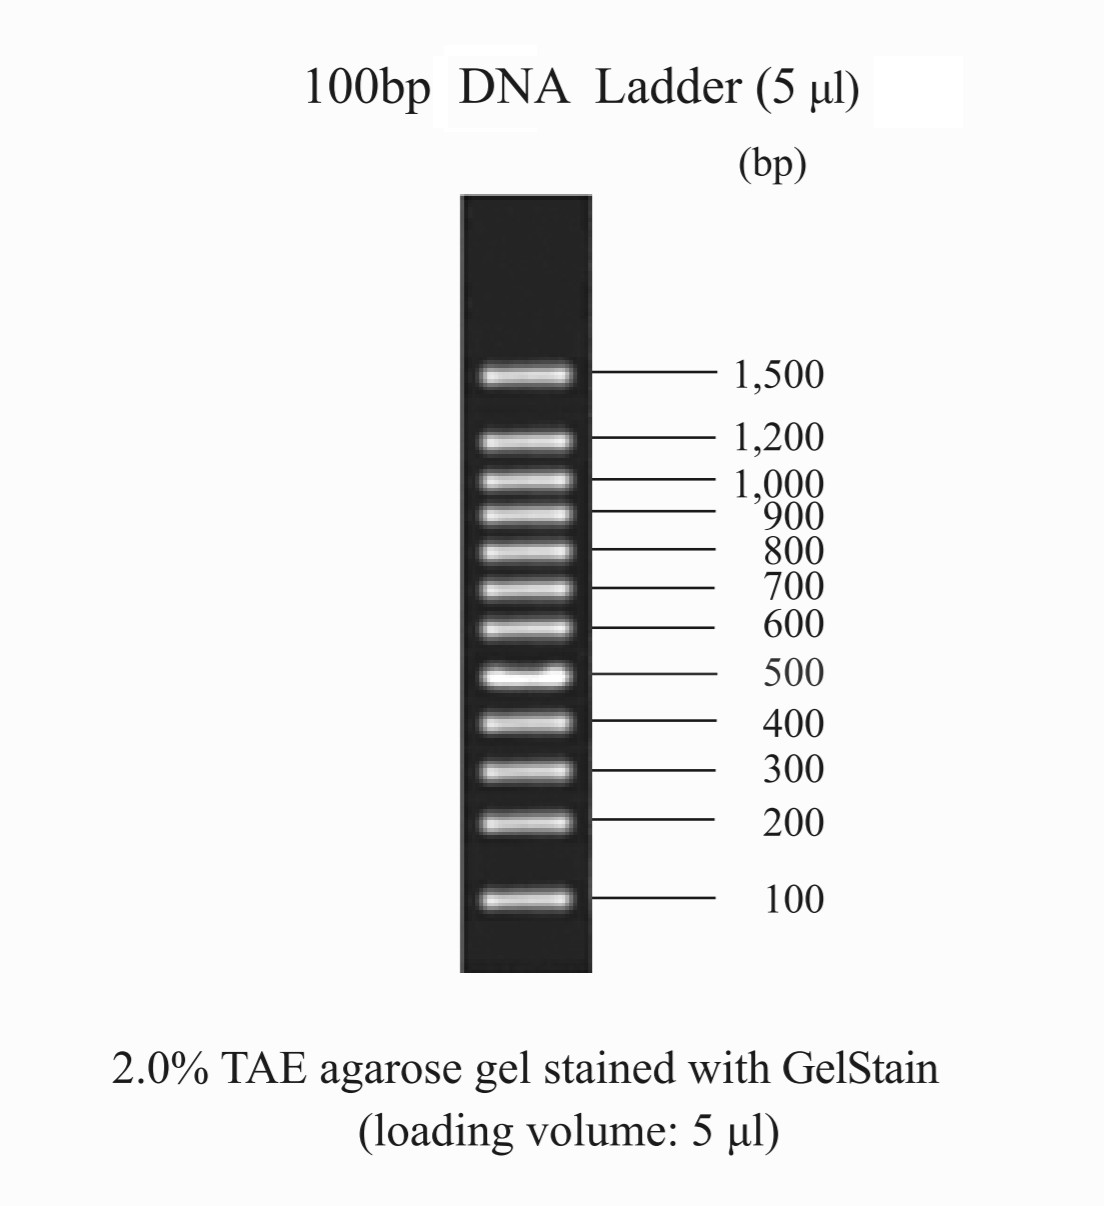 DNA Ladder 100bp - The ODIN